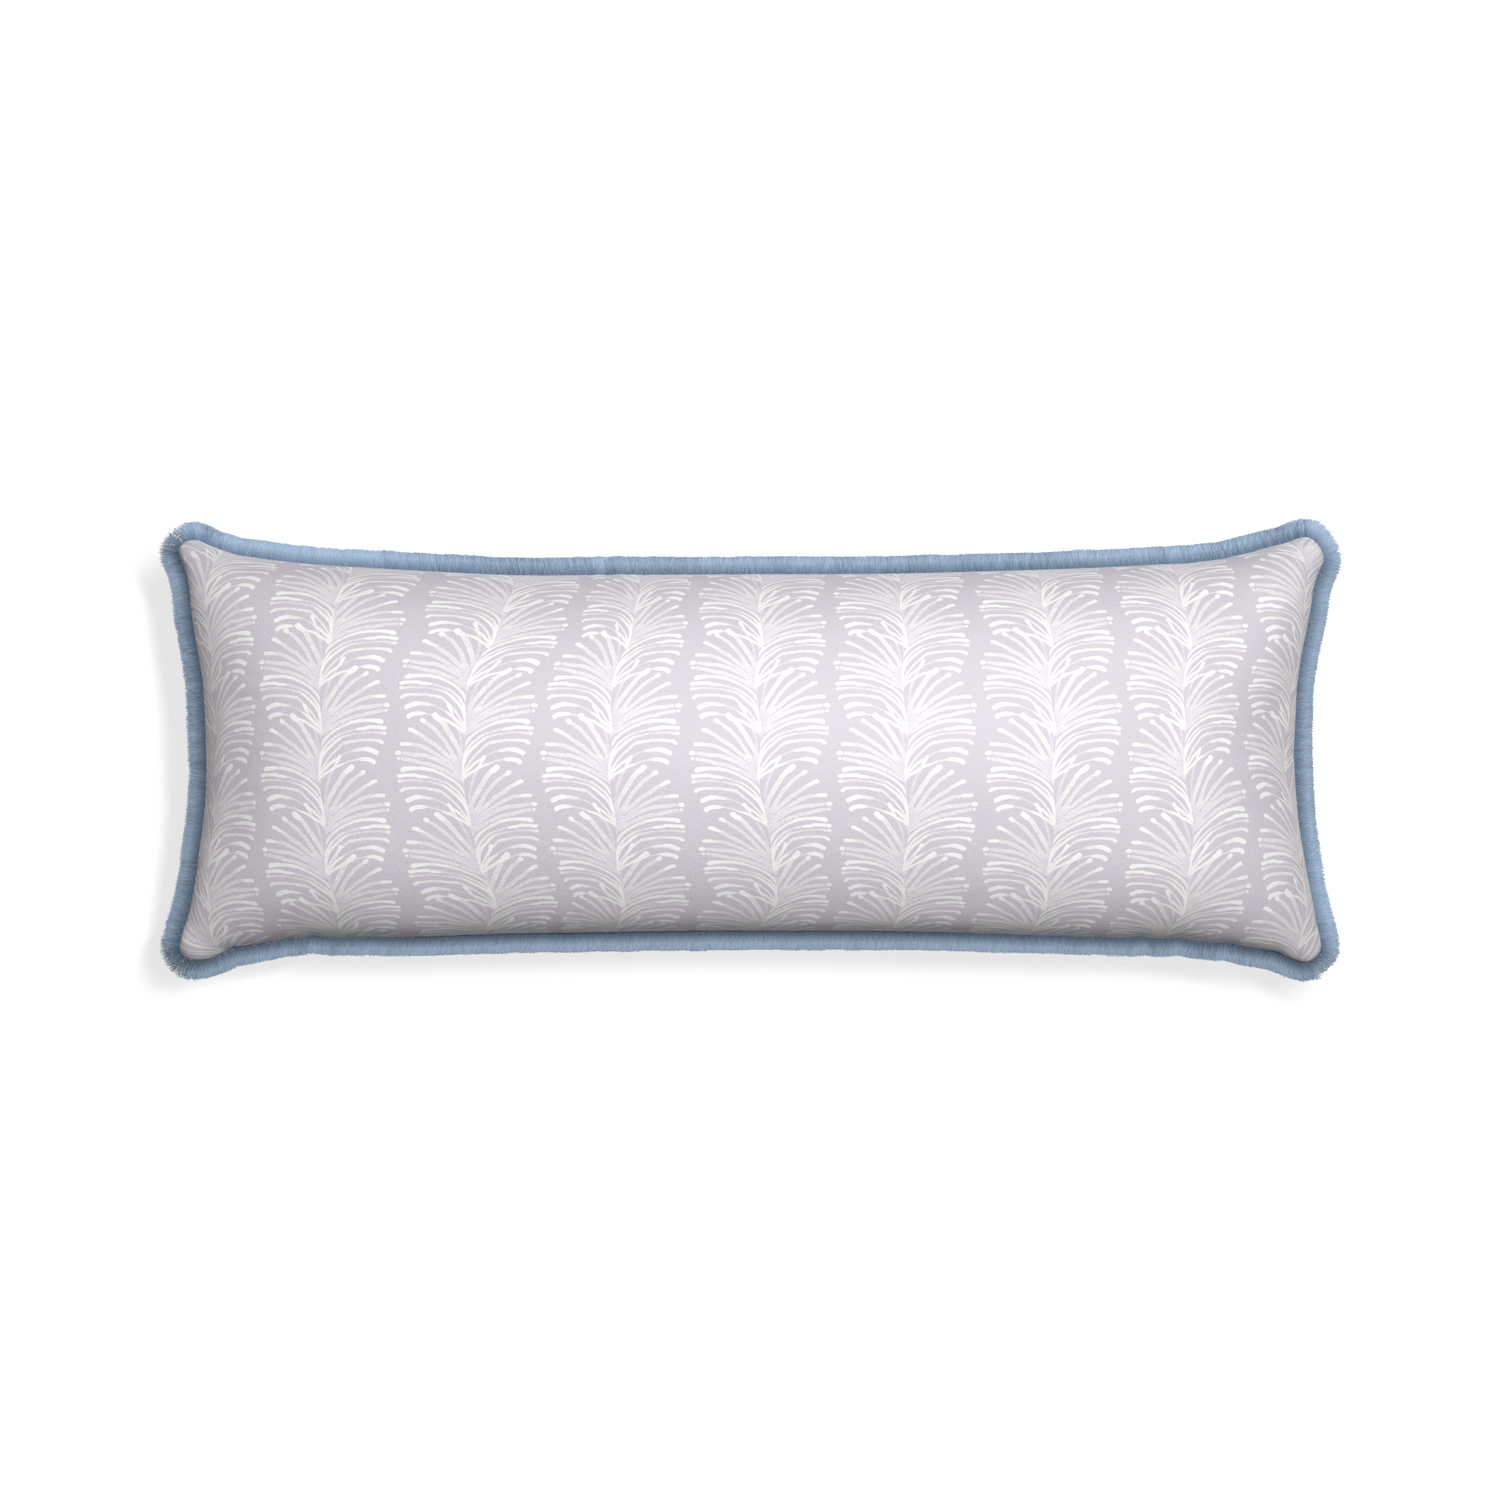 Xl-lumbar emma lavender custom pillow with sky fringe on white background